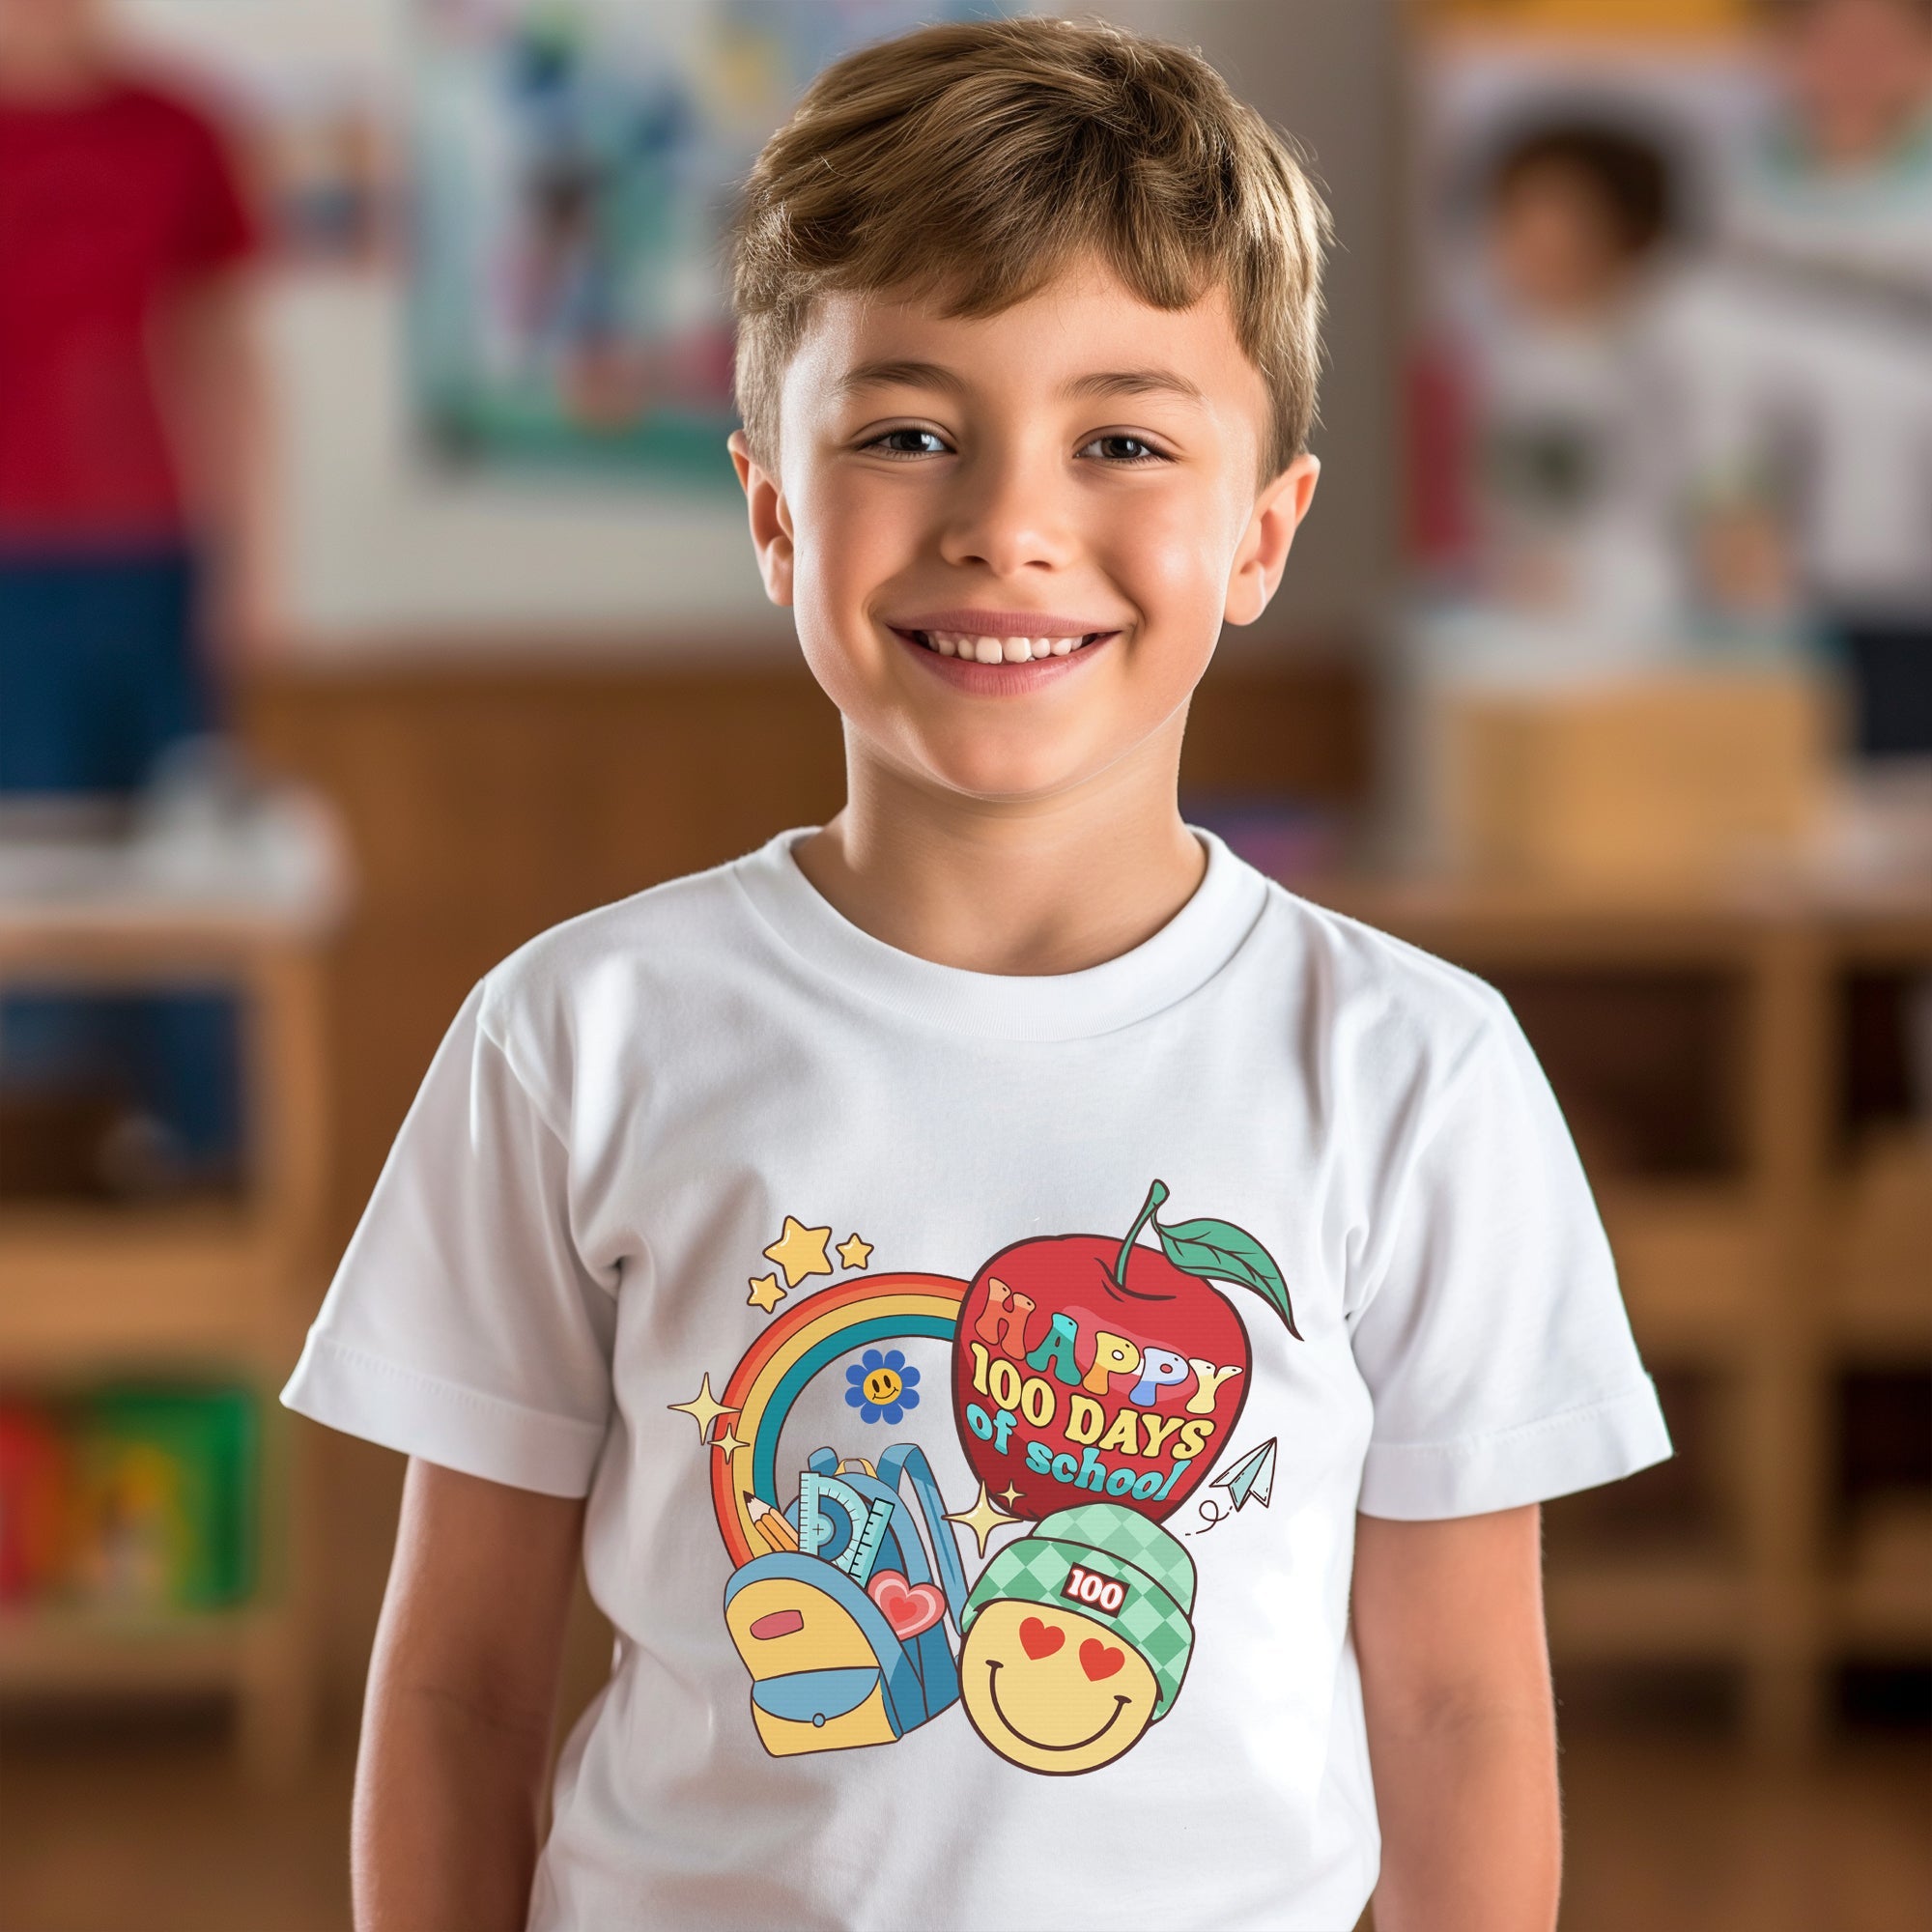 100 Days of School Kids T-Shirt 1186